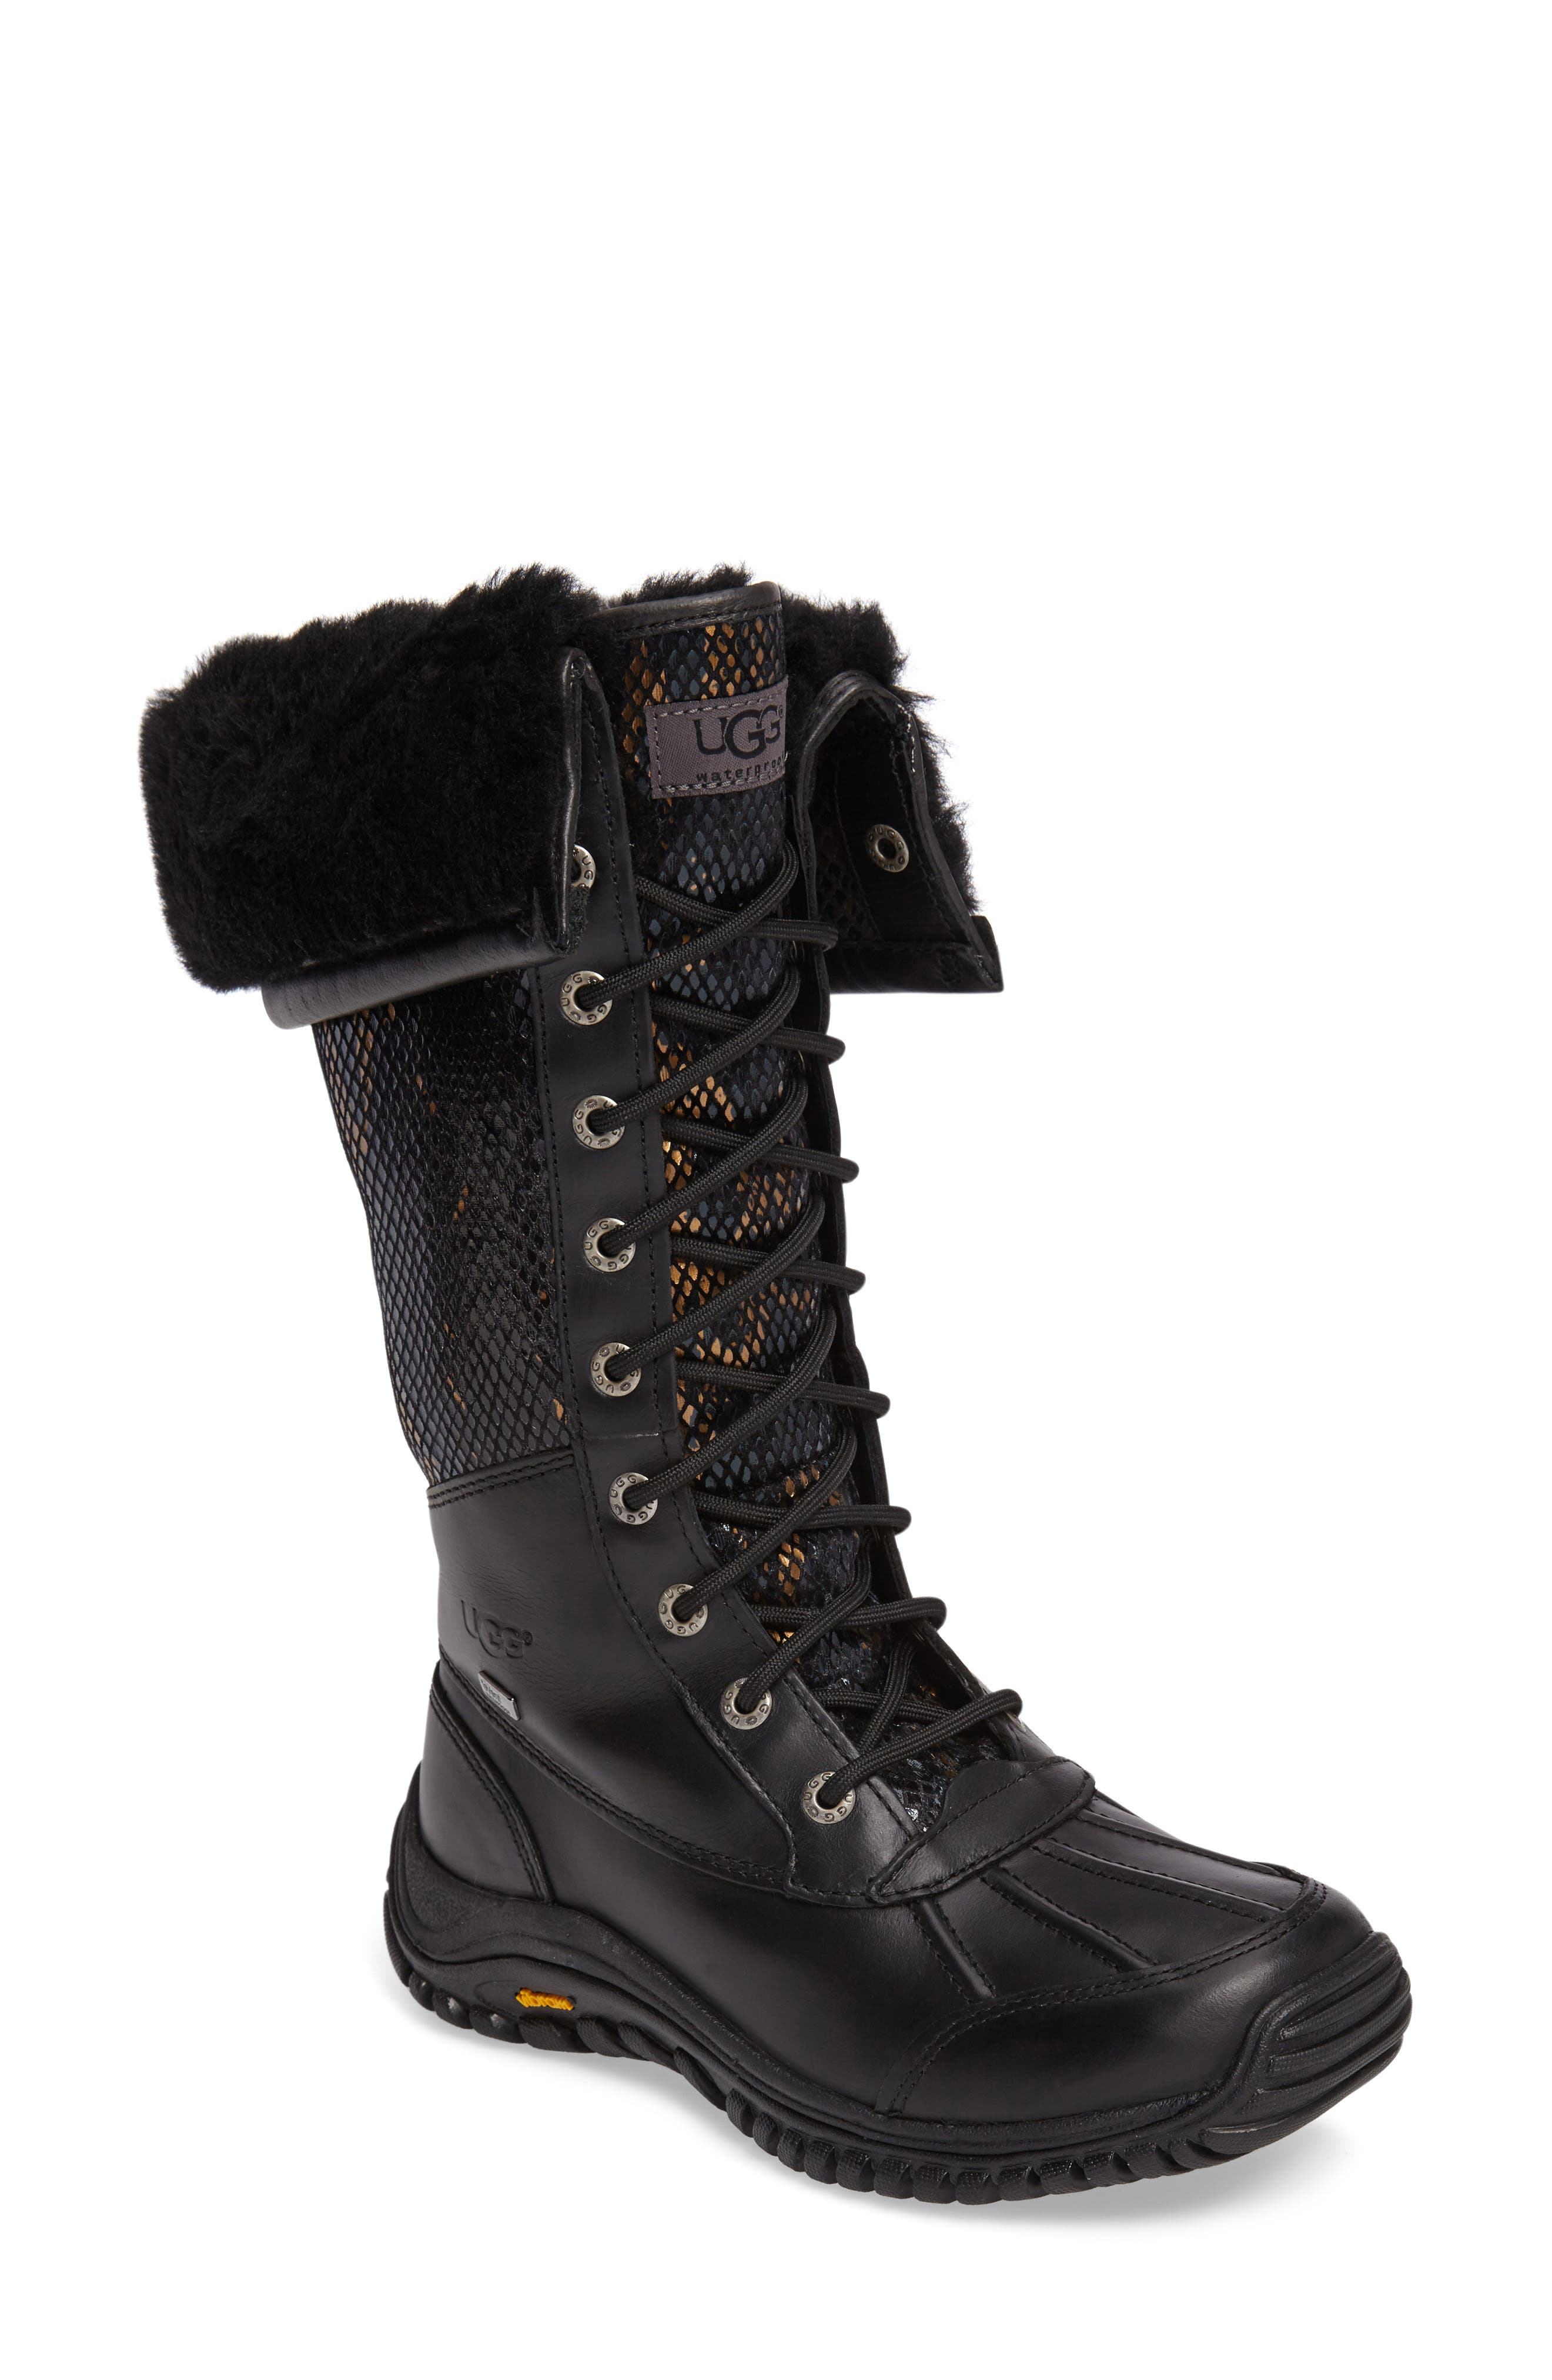 nordstrom winter boots